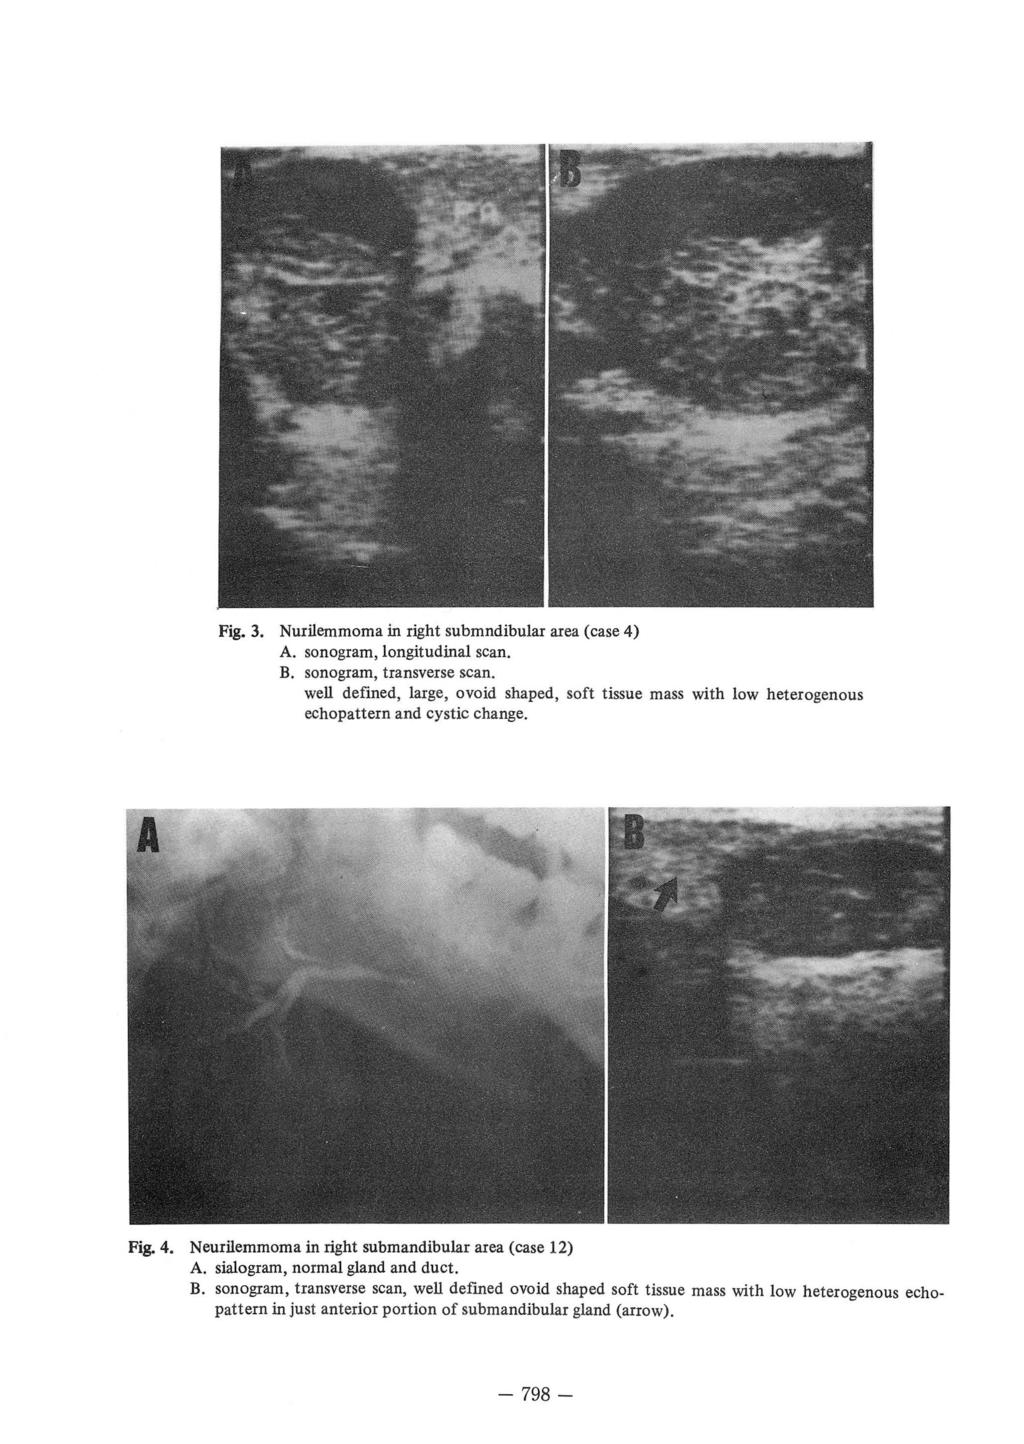 Fig.3. Nurilemmoma in right submndibular area (case 4) A. sonogram, longitudinal scan. B. sonogram, transverse scan.